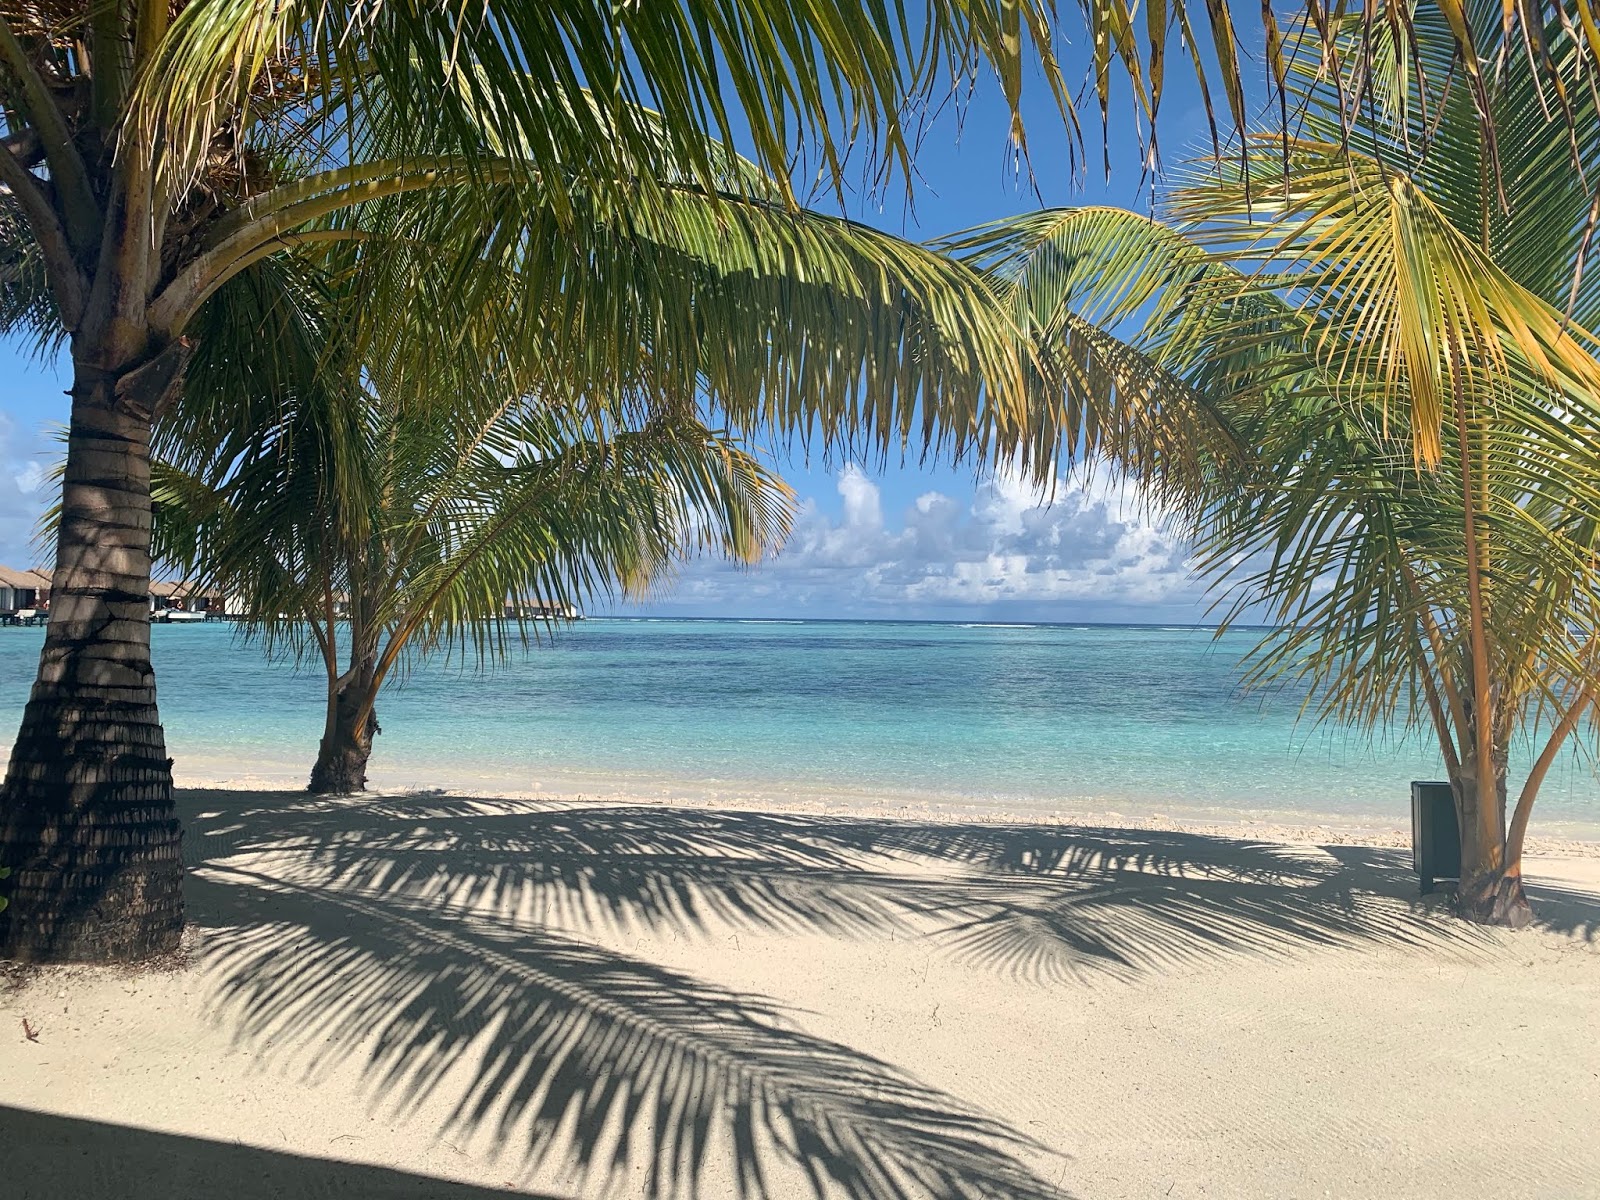 Foto von Falhumaafushi Resort Beach hotelbereich